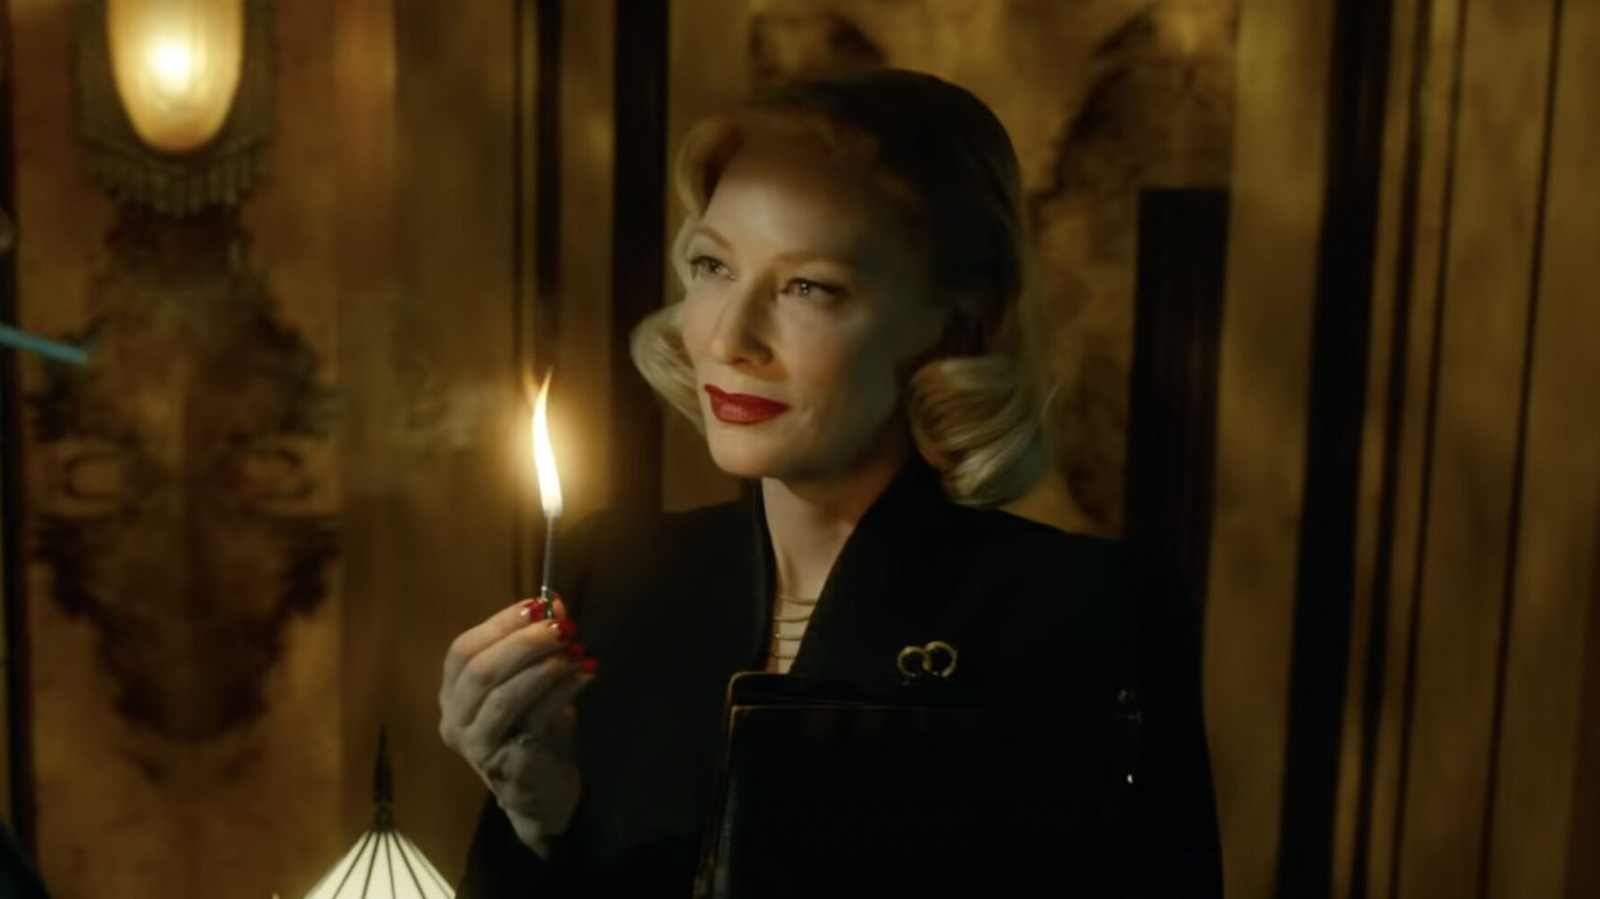 Serie Tv Disclaimer, con Cate Blanchett